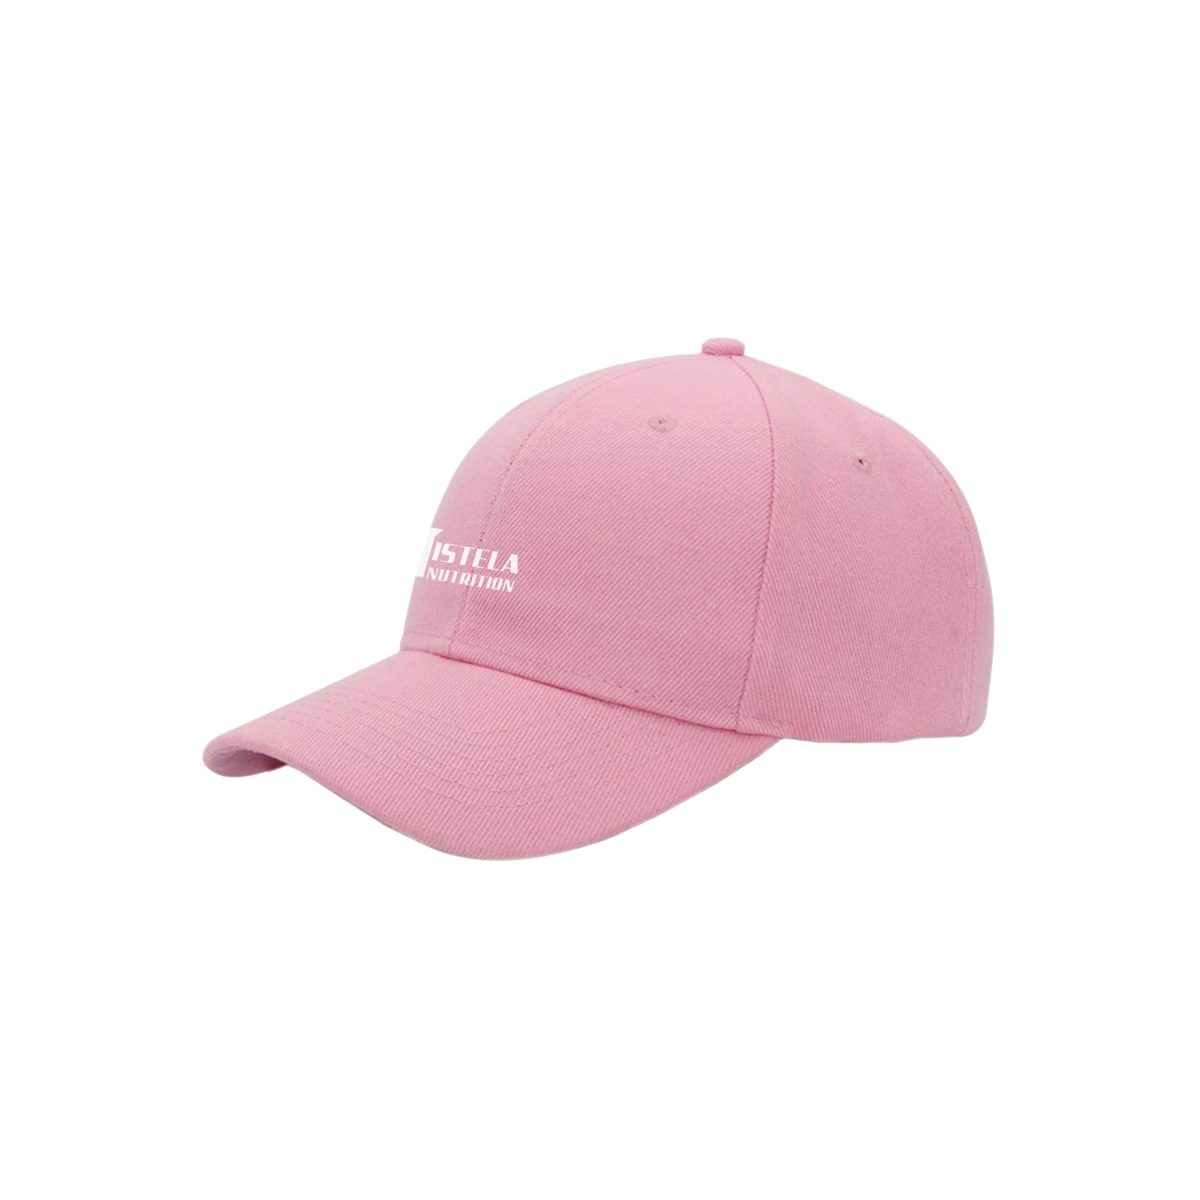 pink sun hat